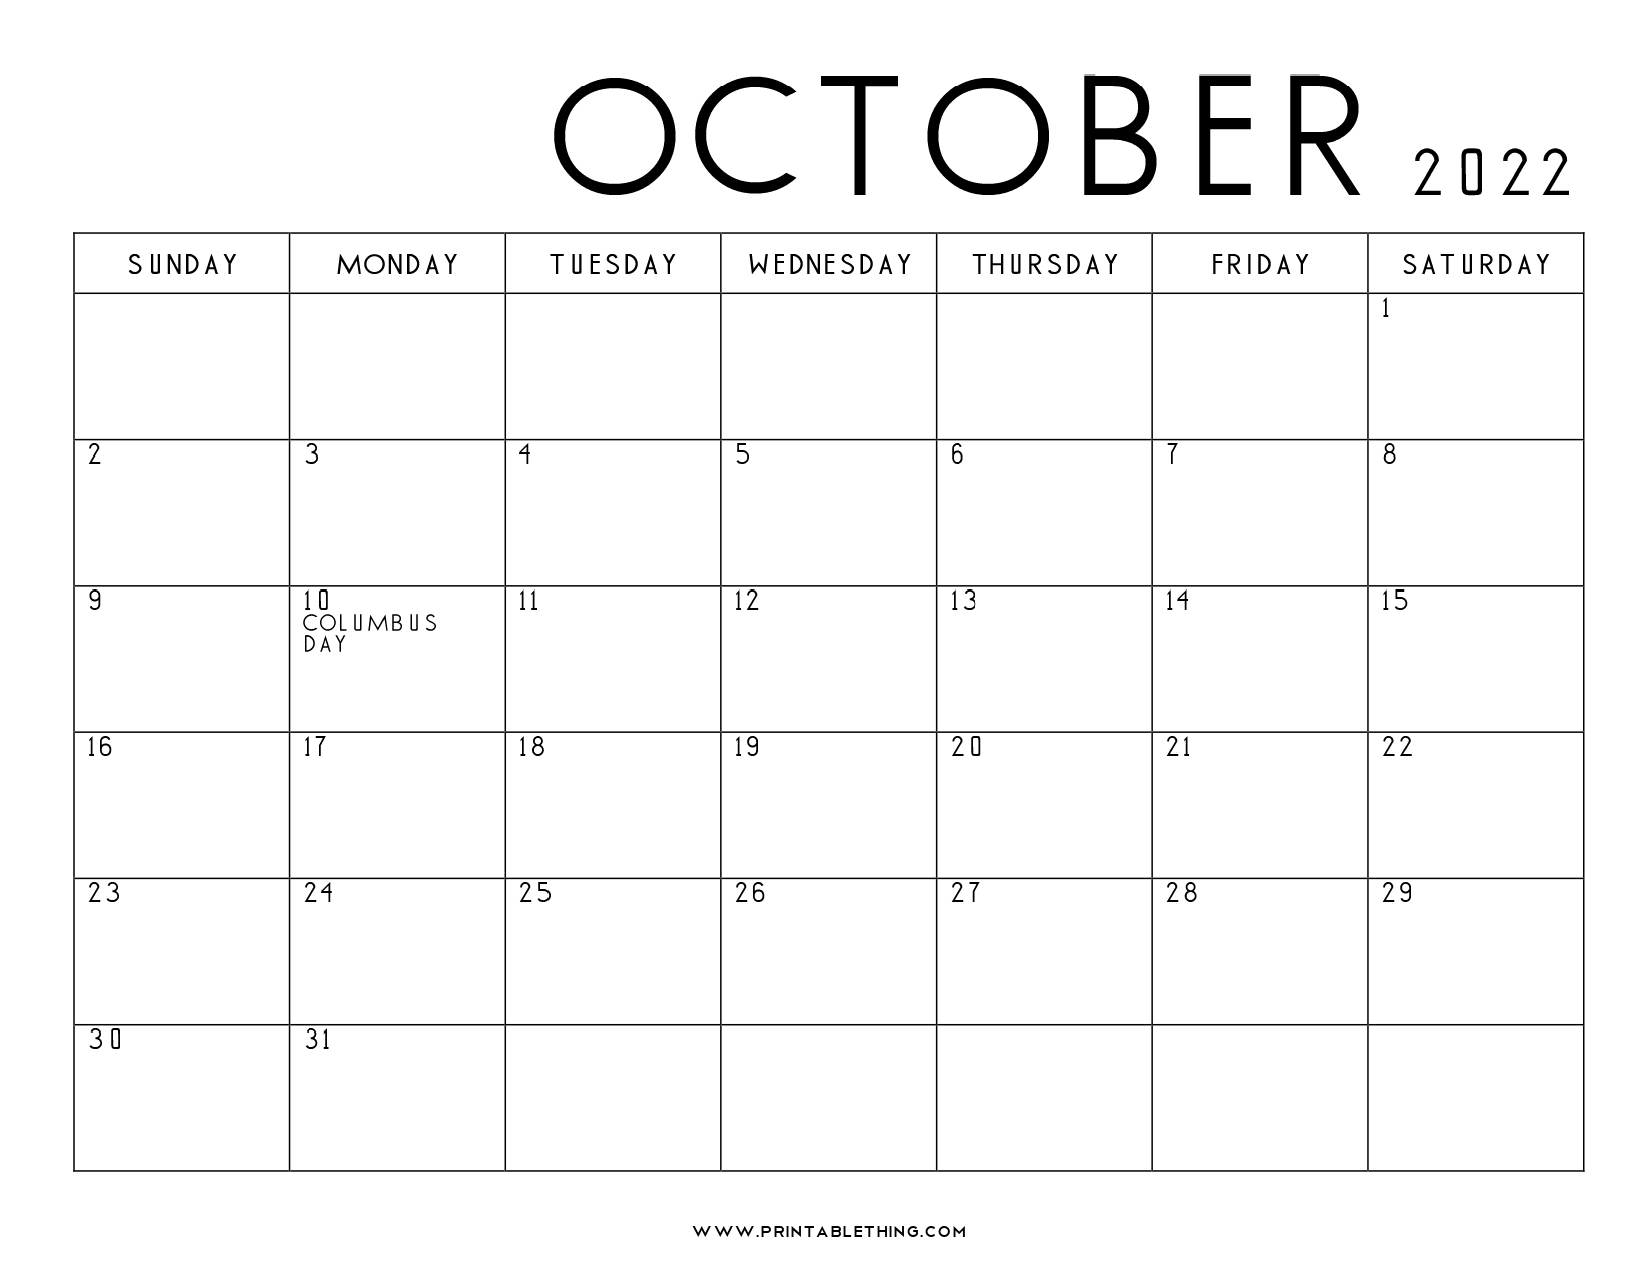 Take Calendar October 2021 To September 2022